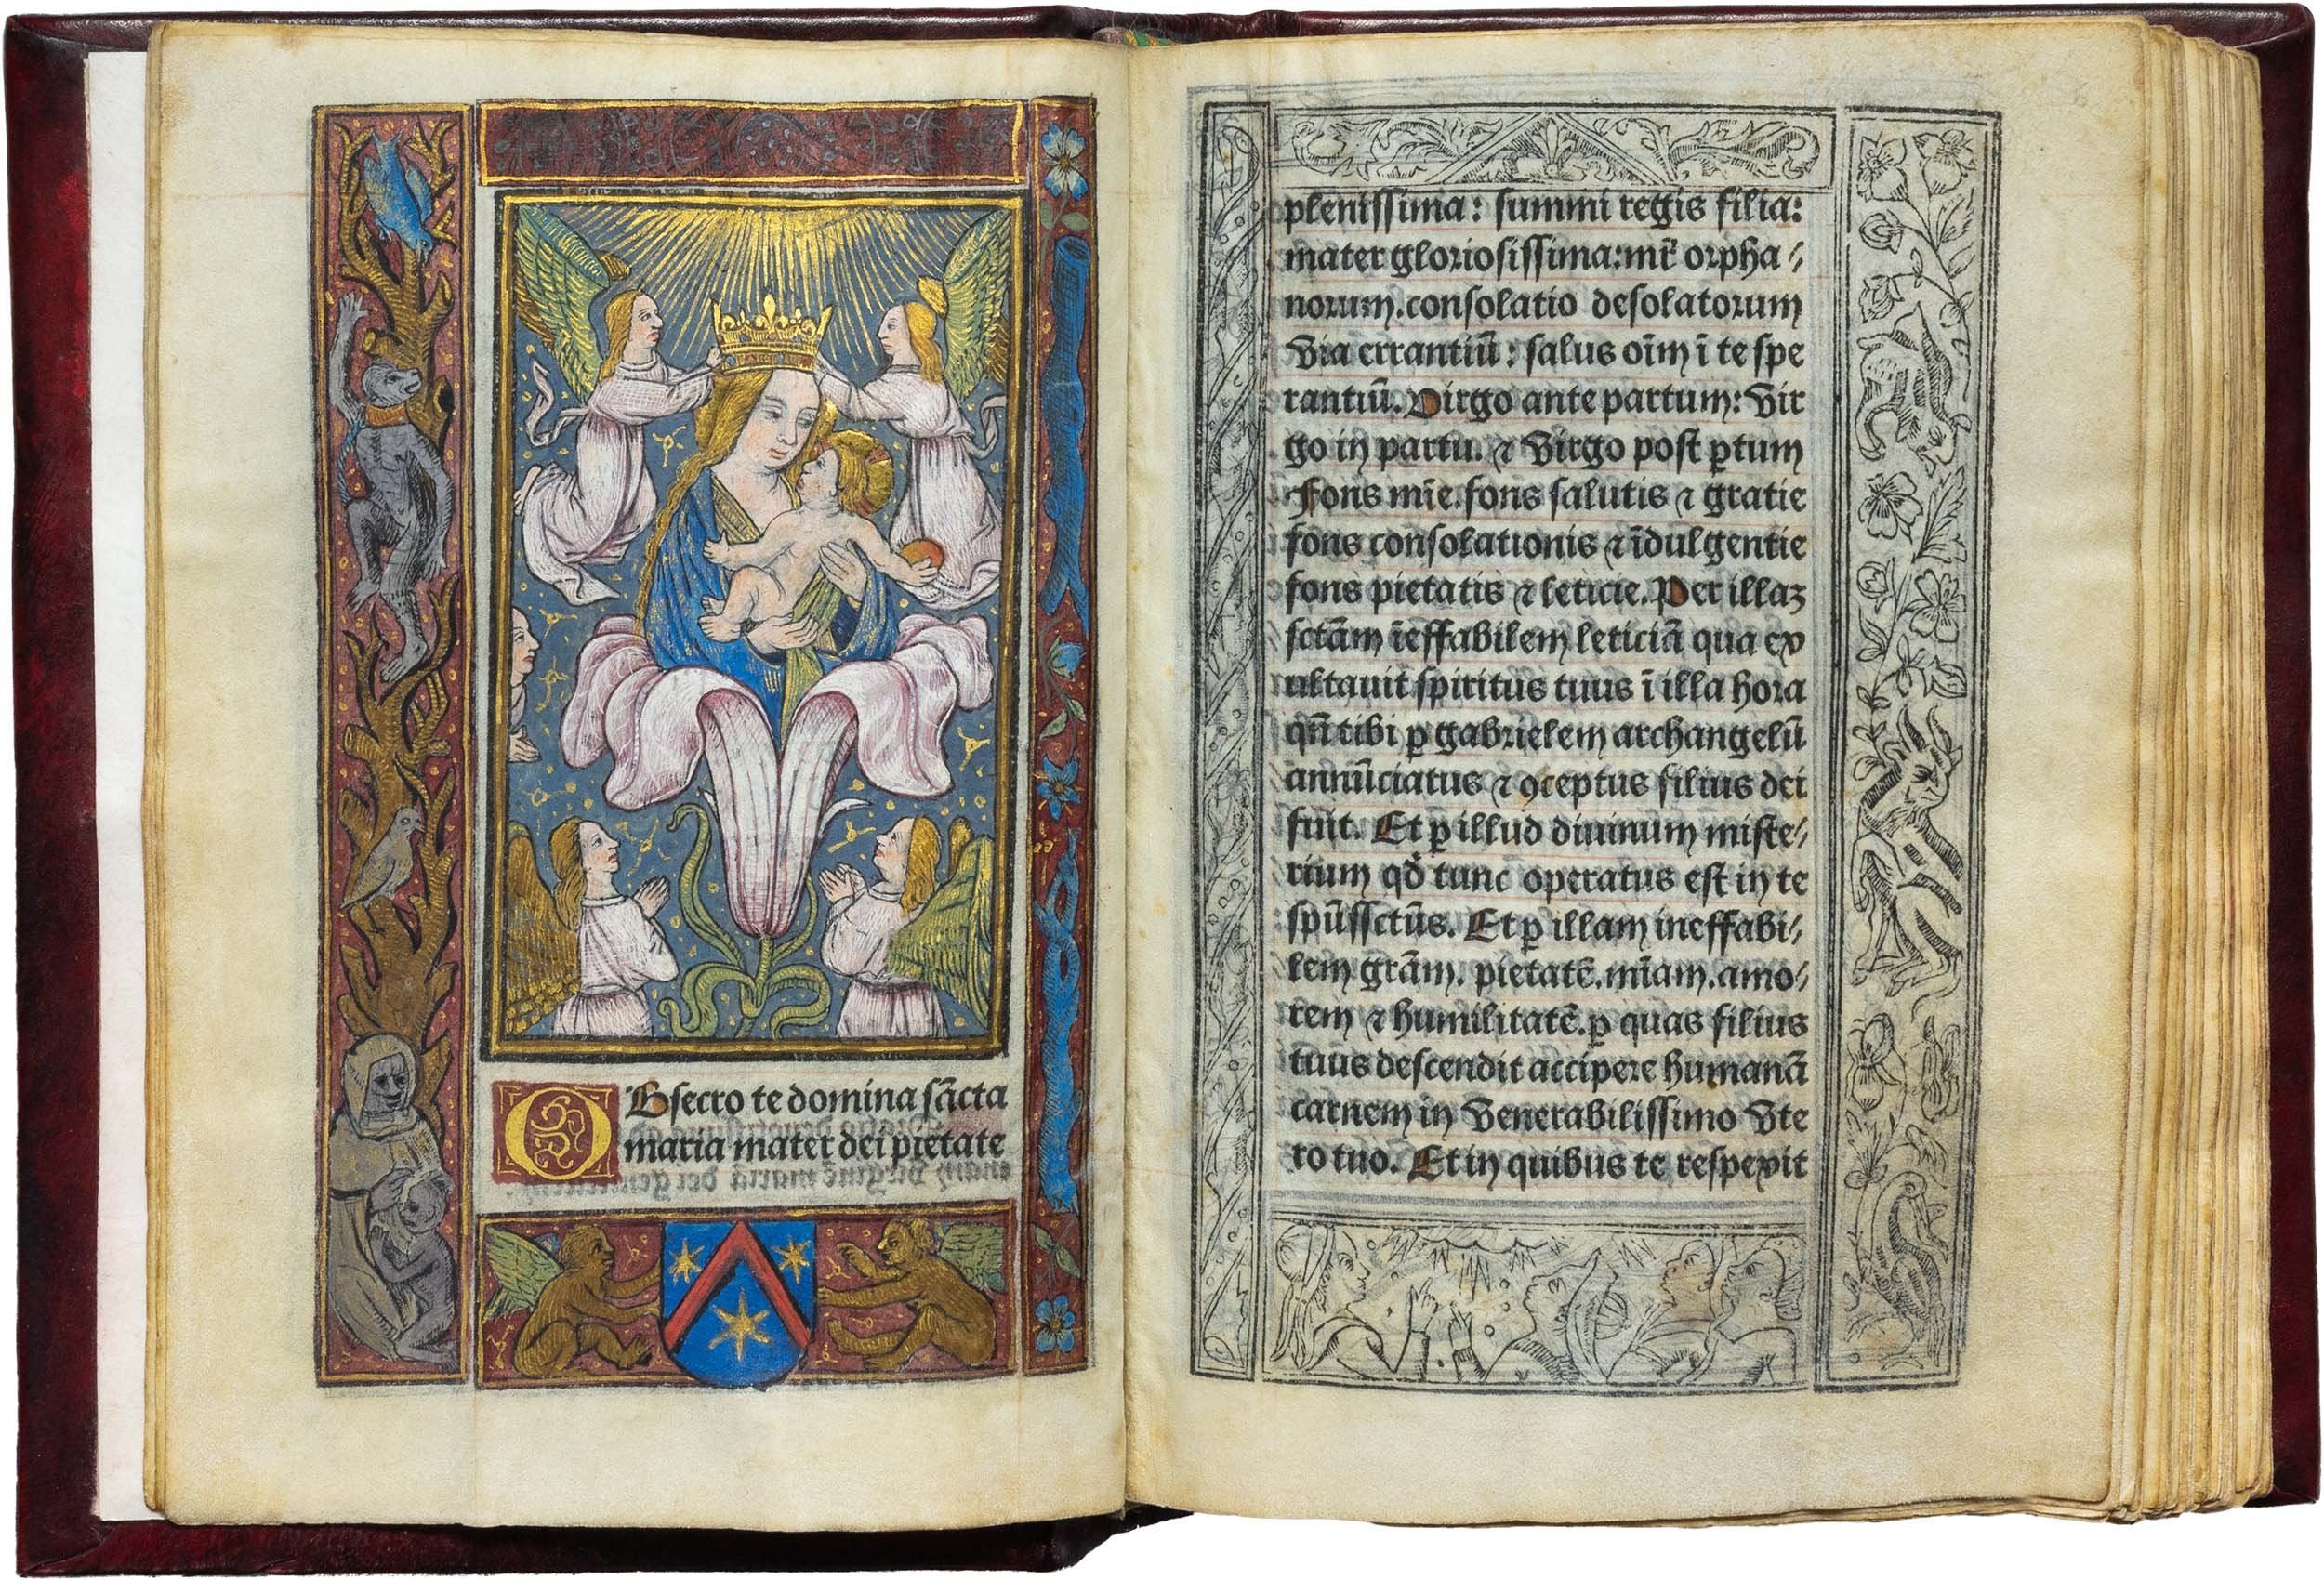 horae-bmv-early-printed-book-of-hours-1487-dupre-08.jpg